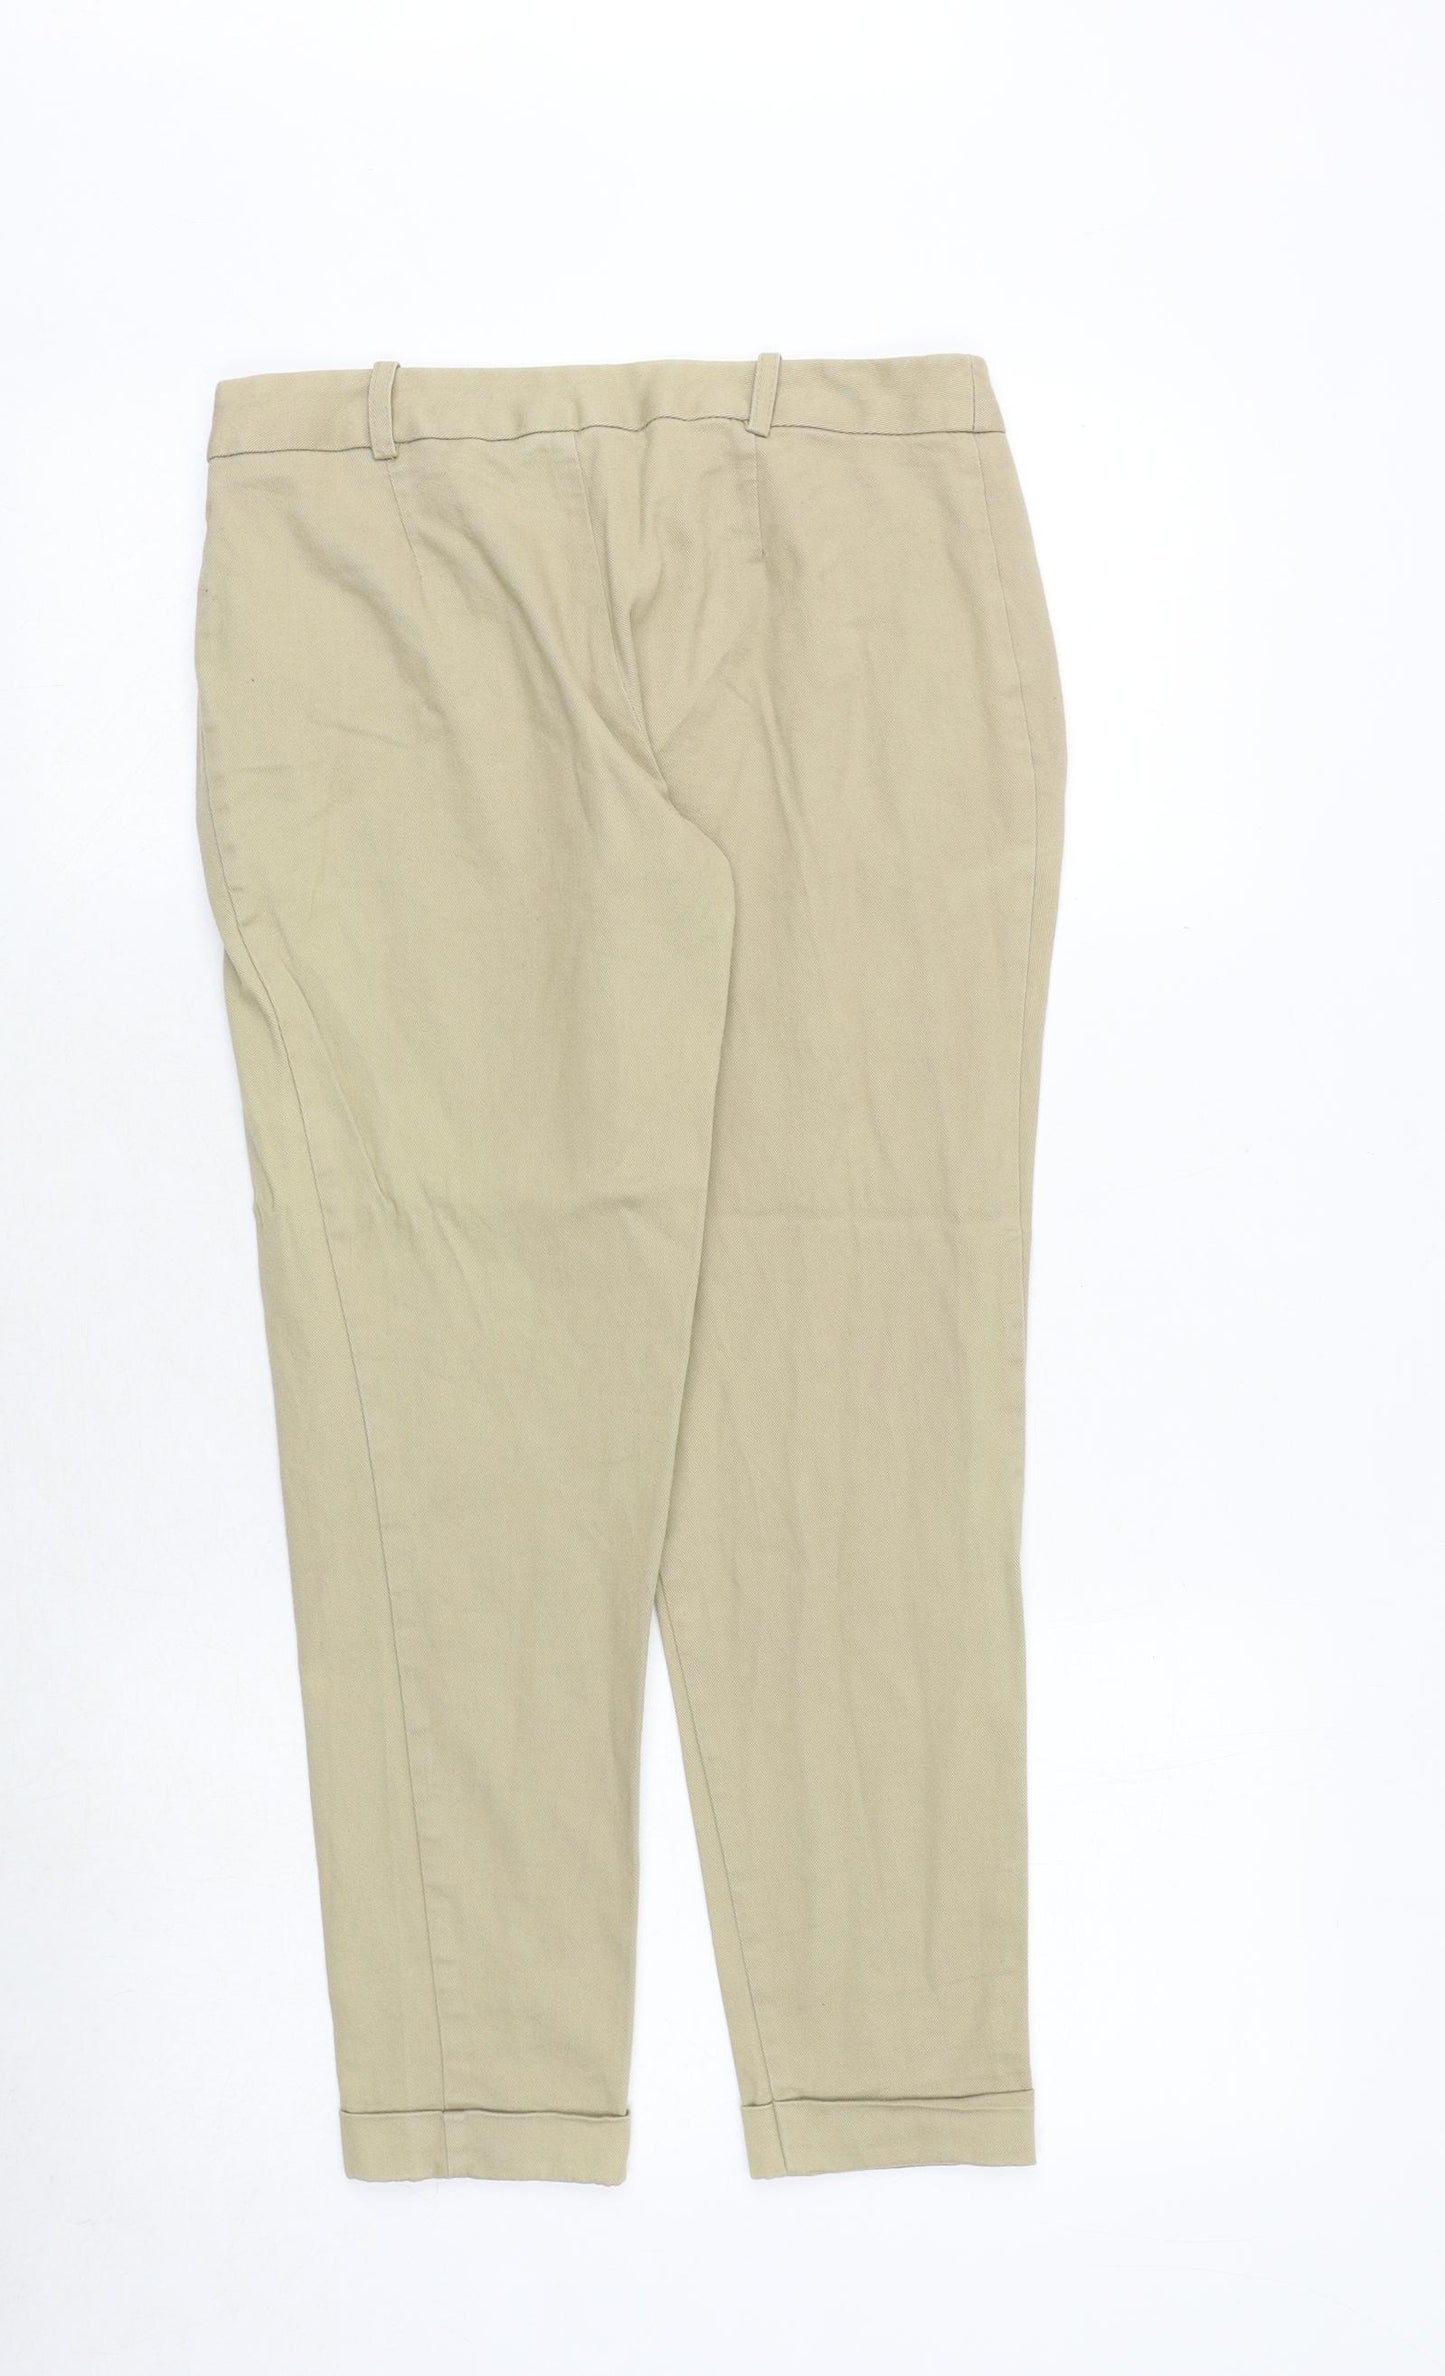 New Look Womens Beige Cotton Chino Trousers Size 8 Regular Zip